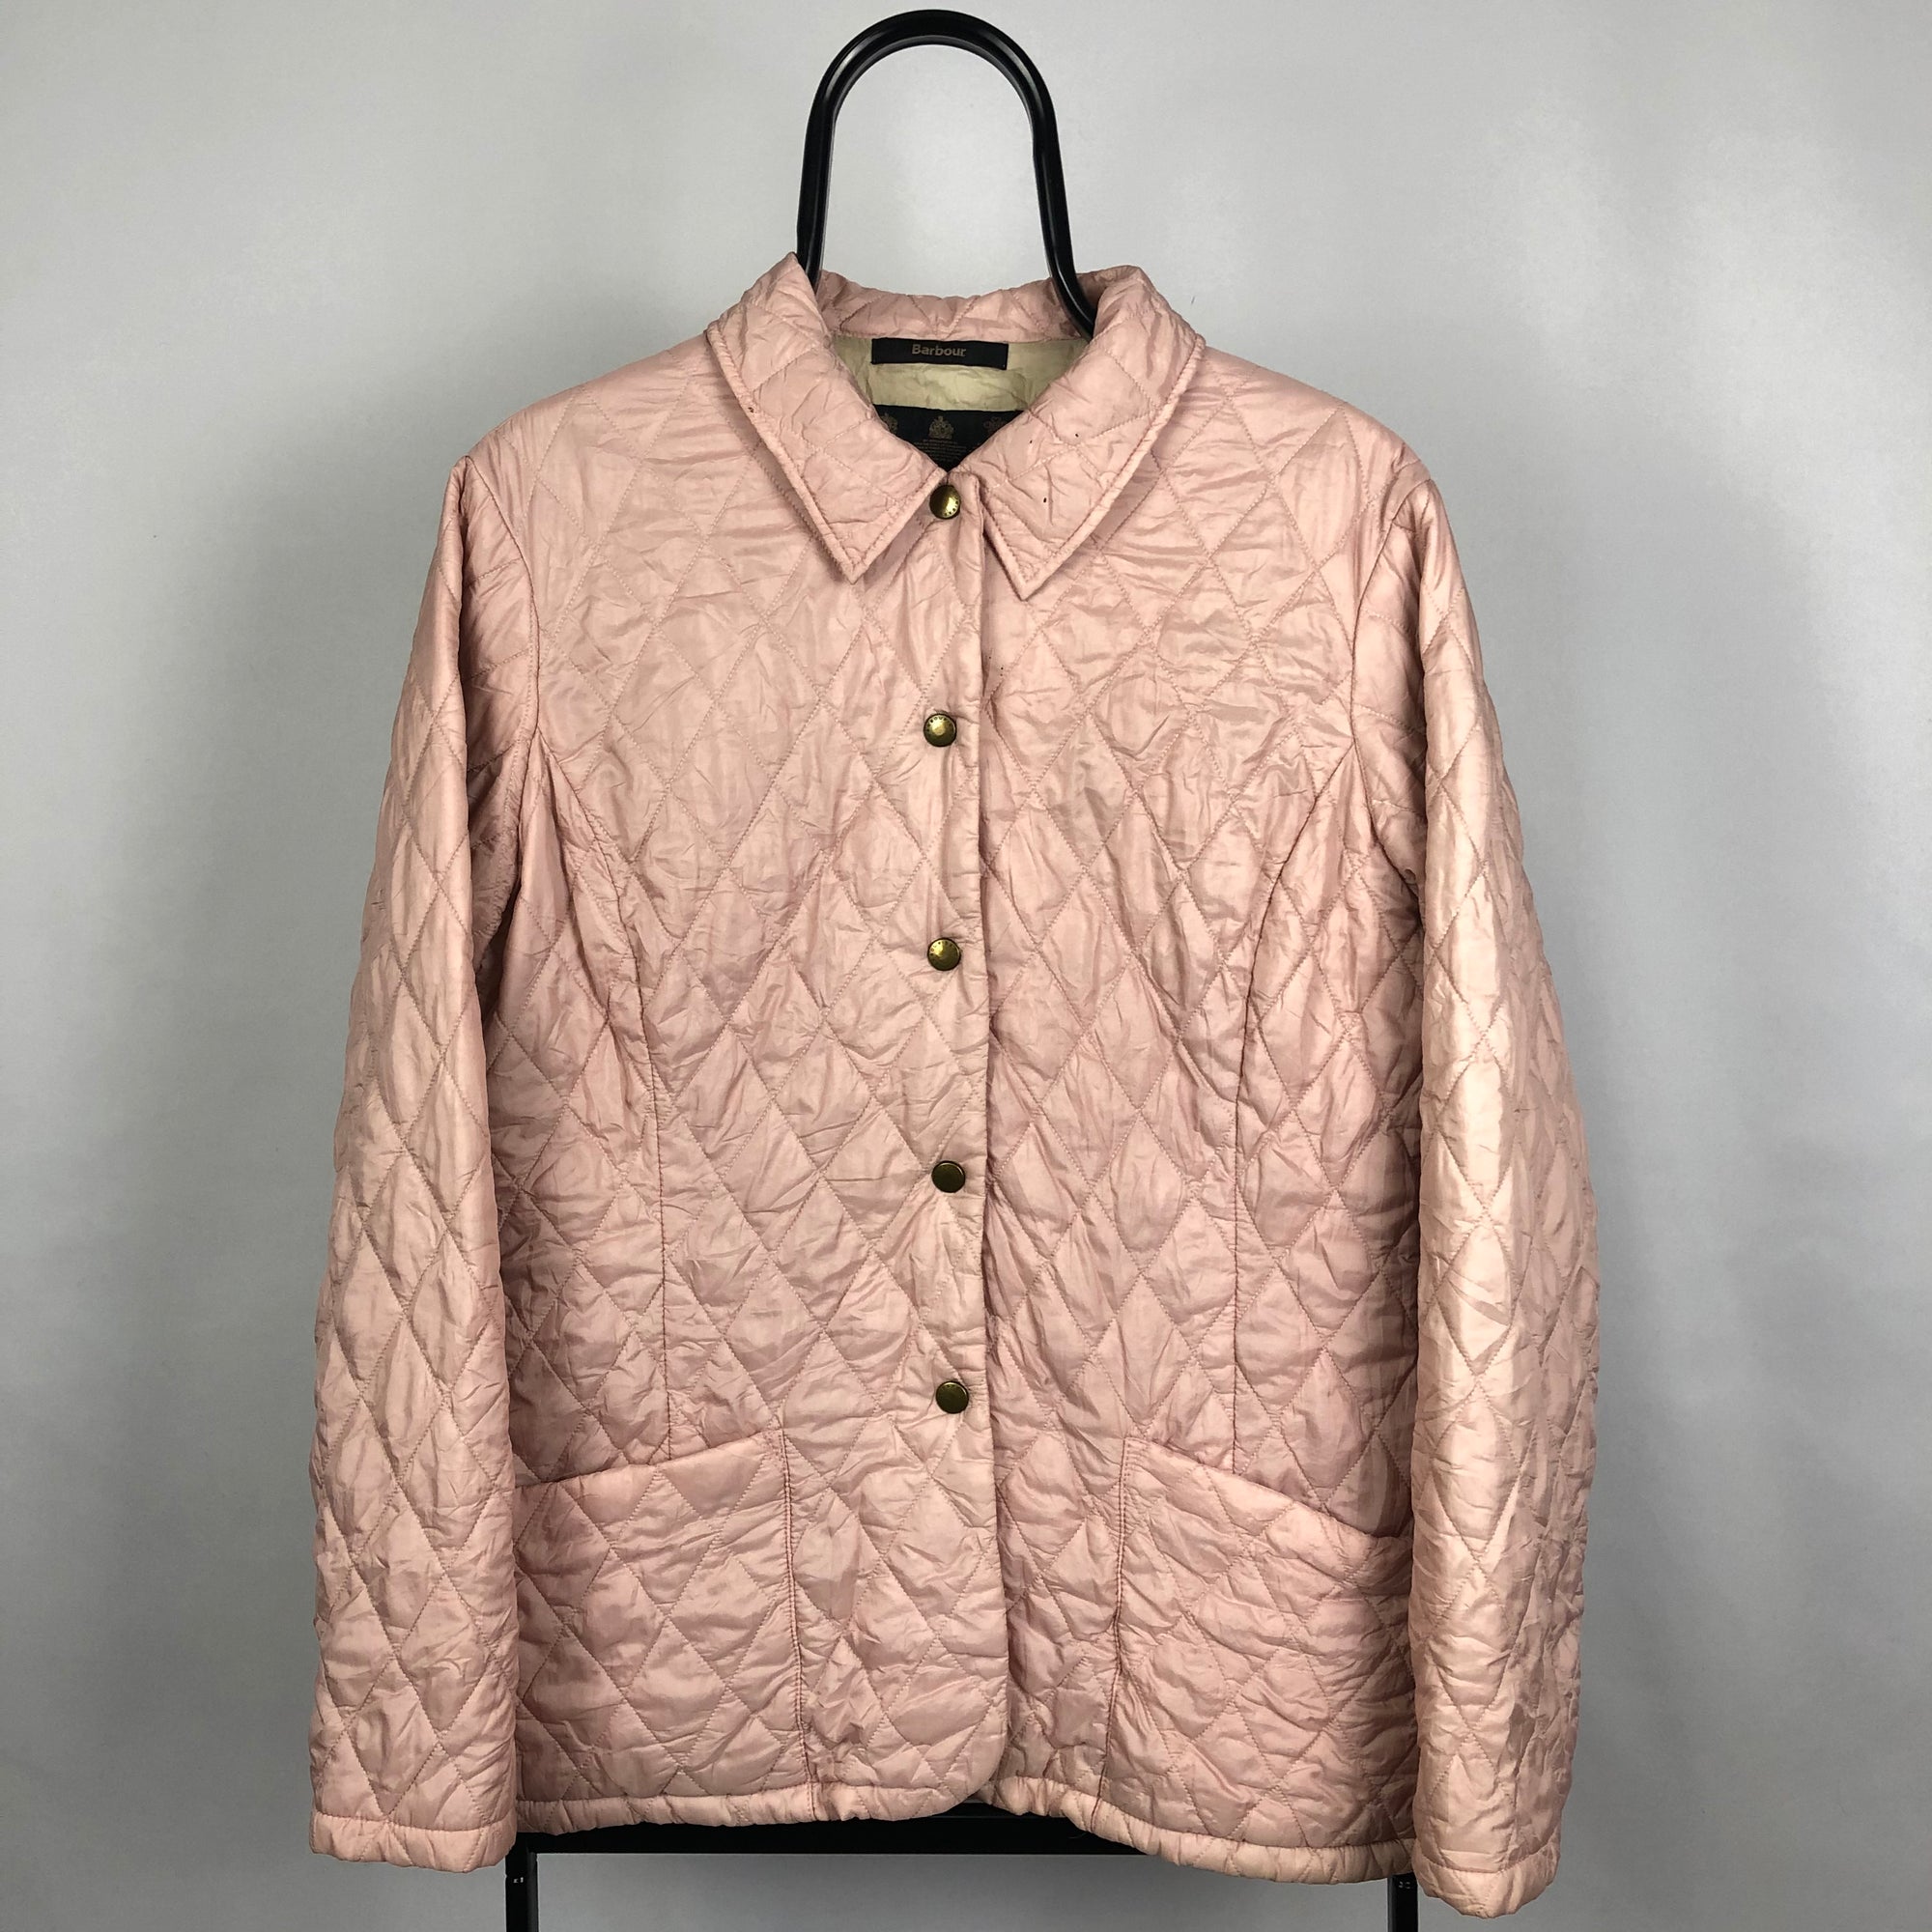 Barbour Quilted Jacket in Baby Pink - Women's Large/Men's Medium